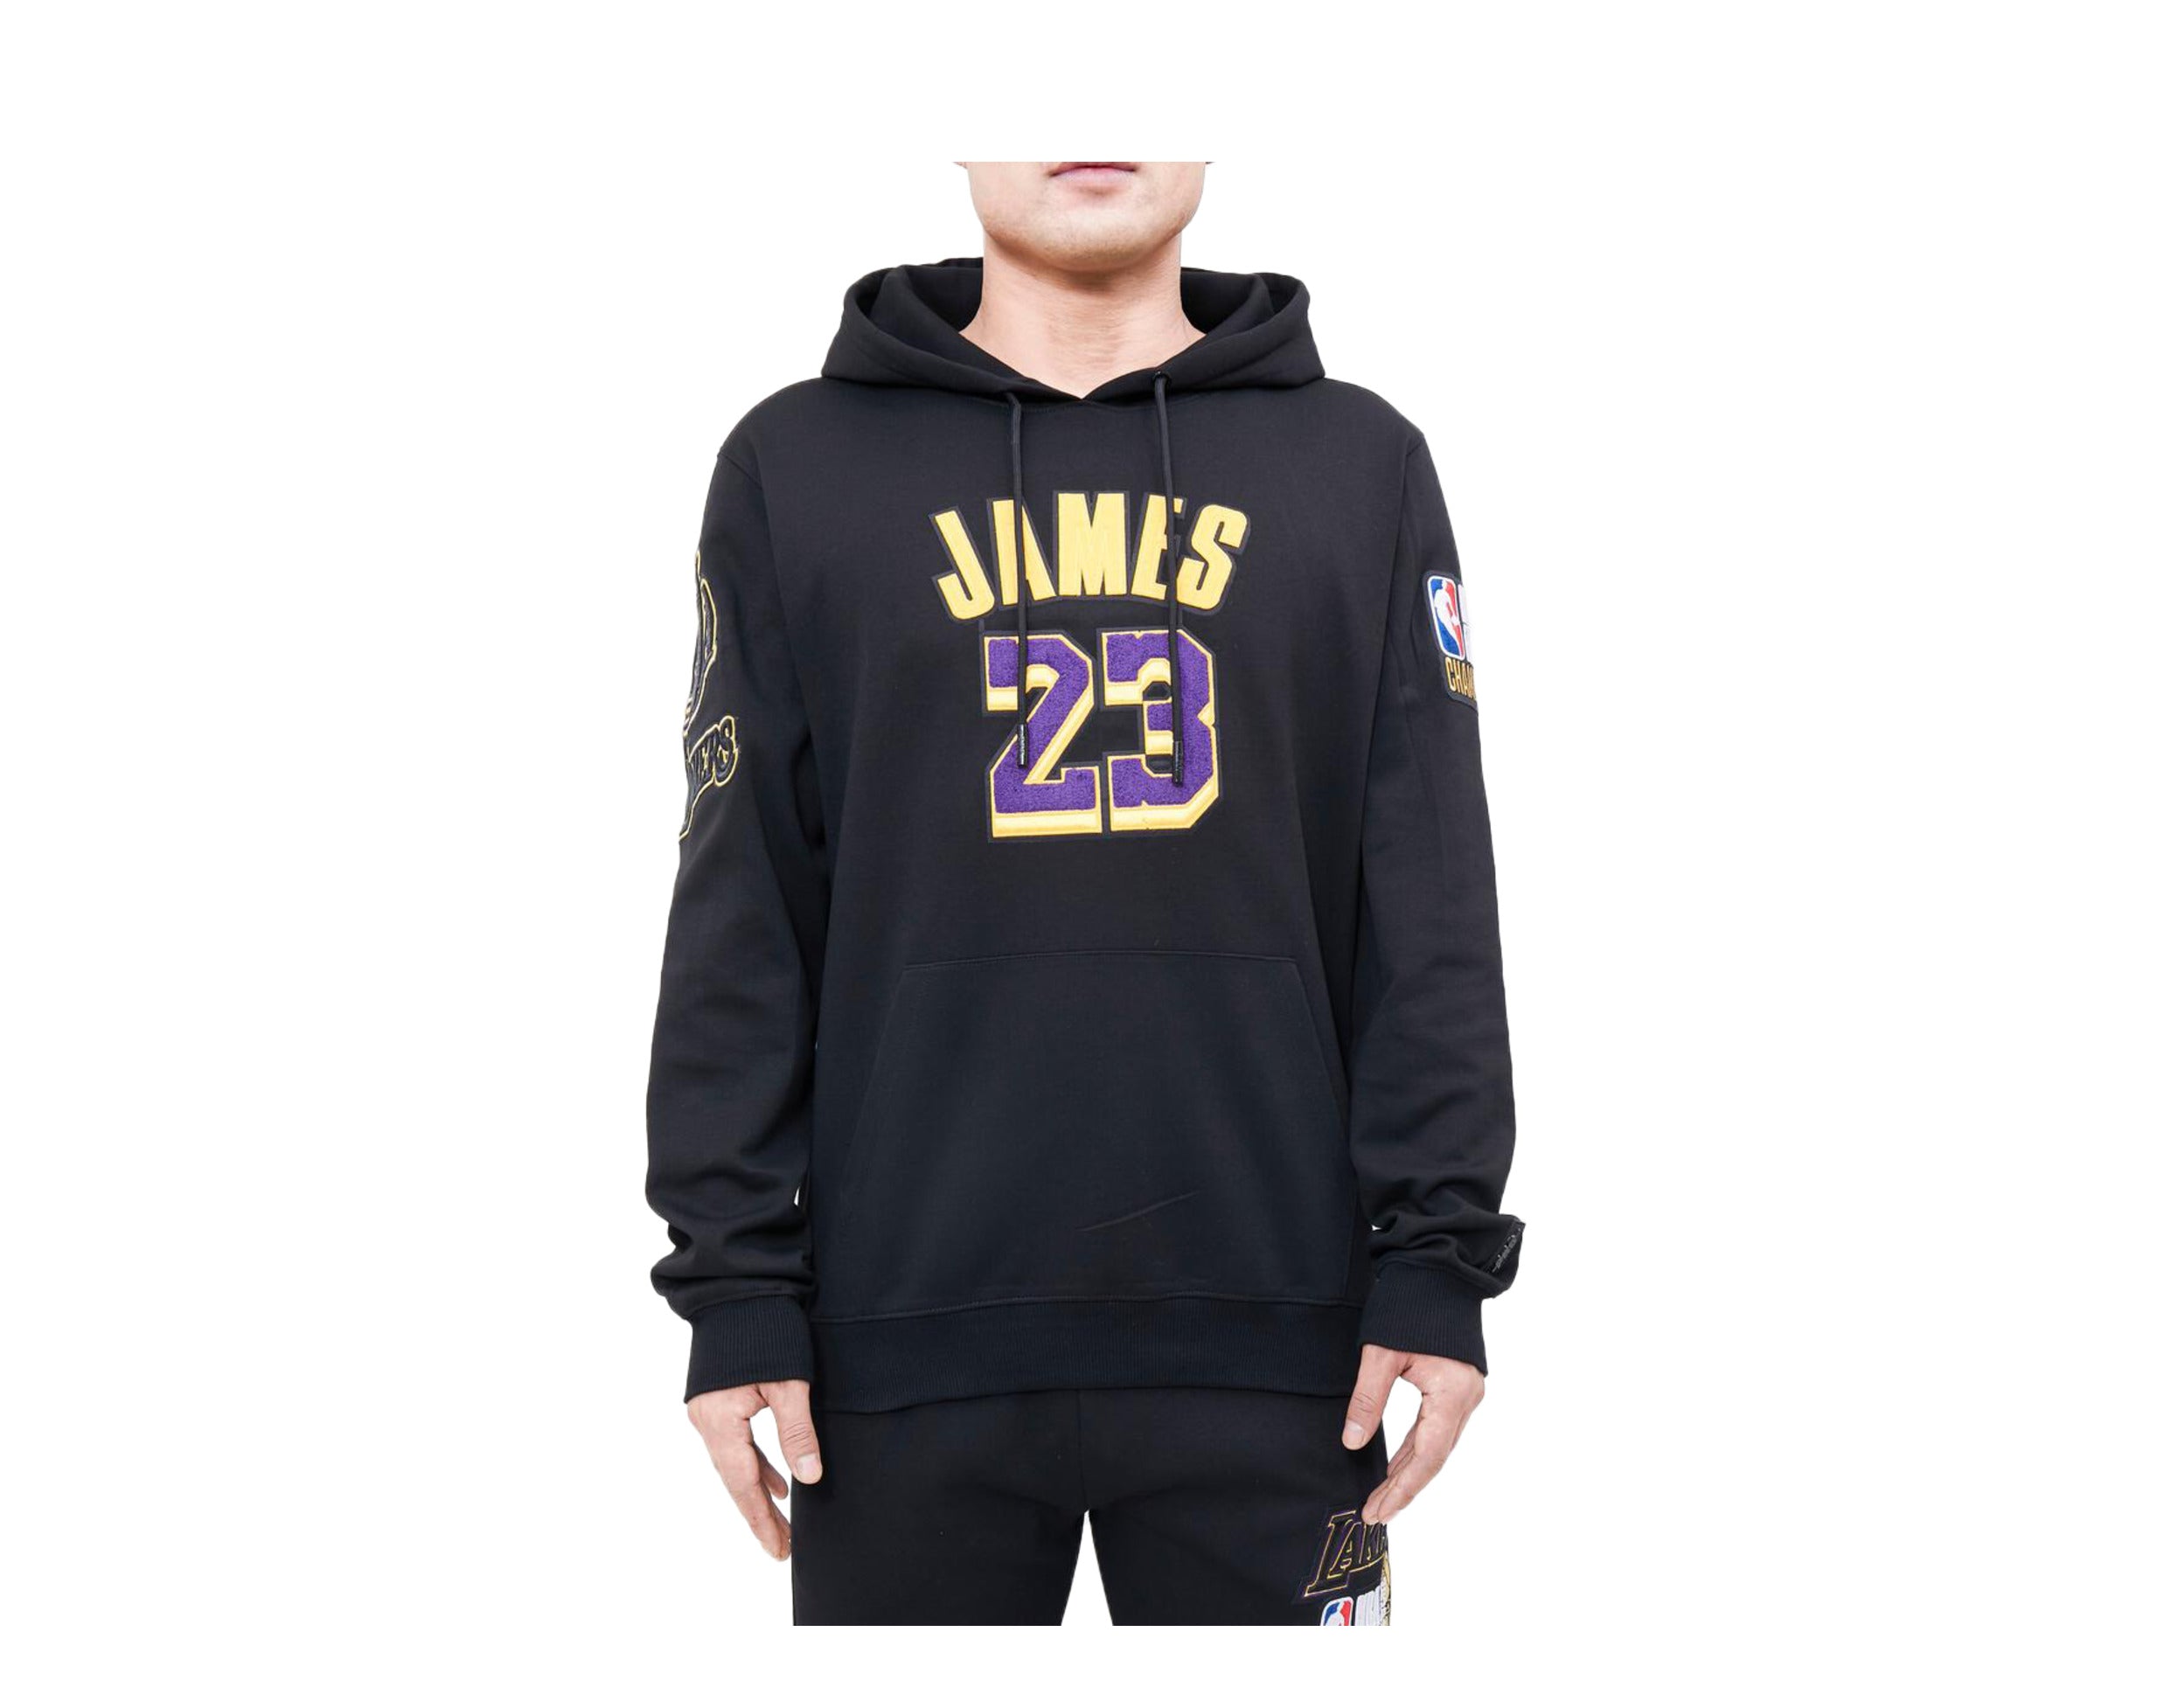 Men's Los Angeles Lakers LeBron James Pro Standard Black Team Player Shorts